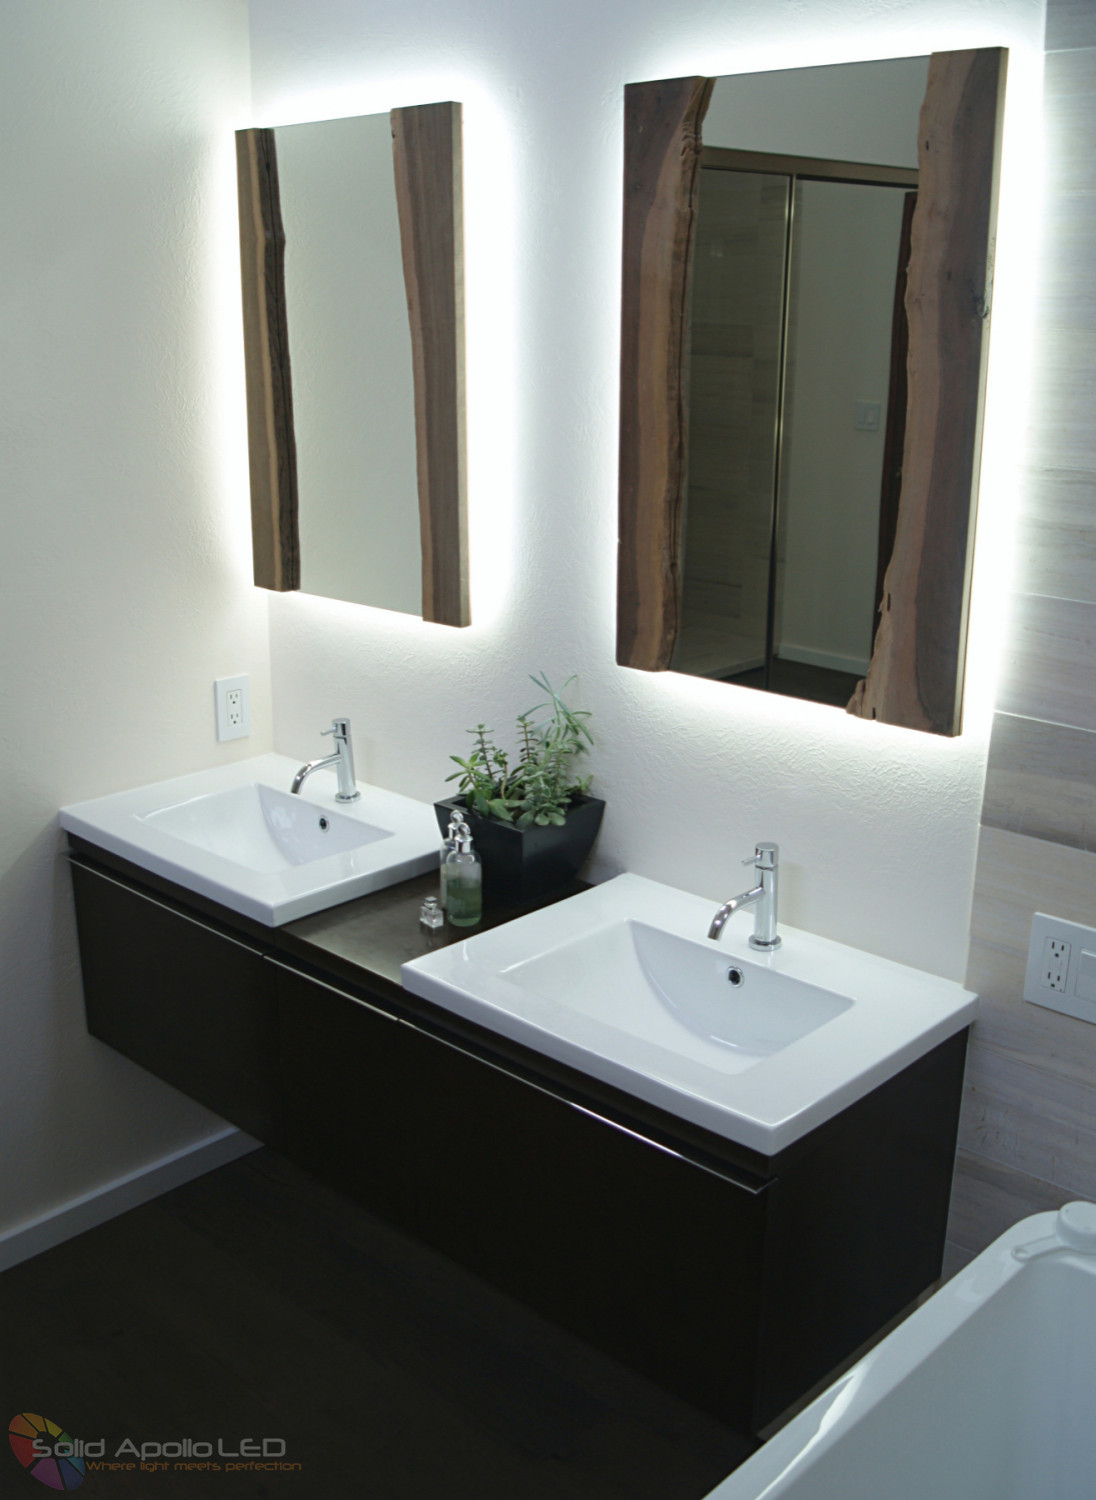 What should LED bathroom lighting meet?